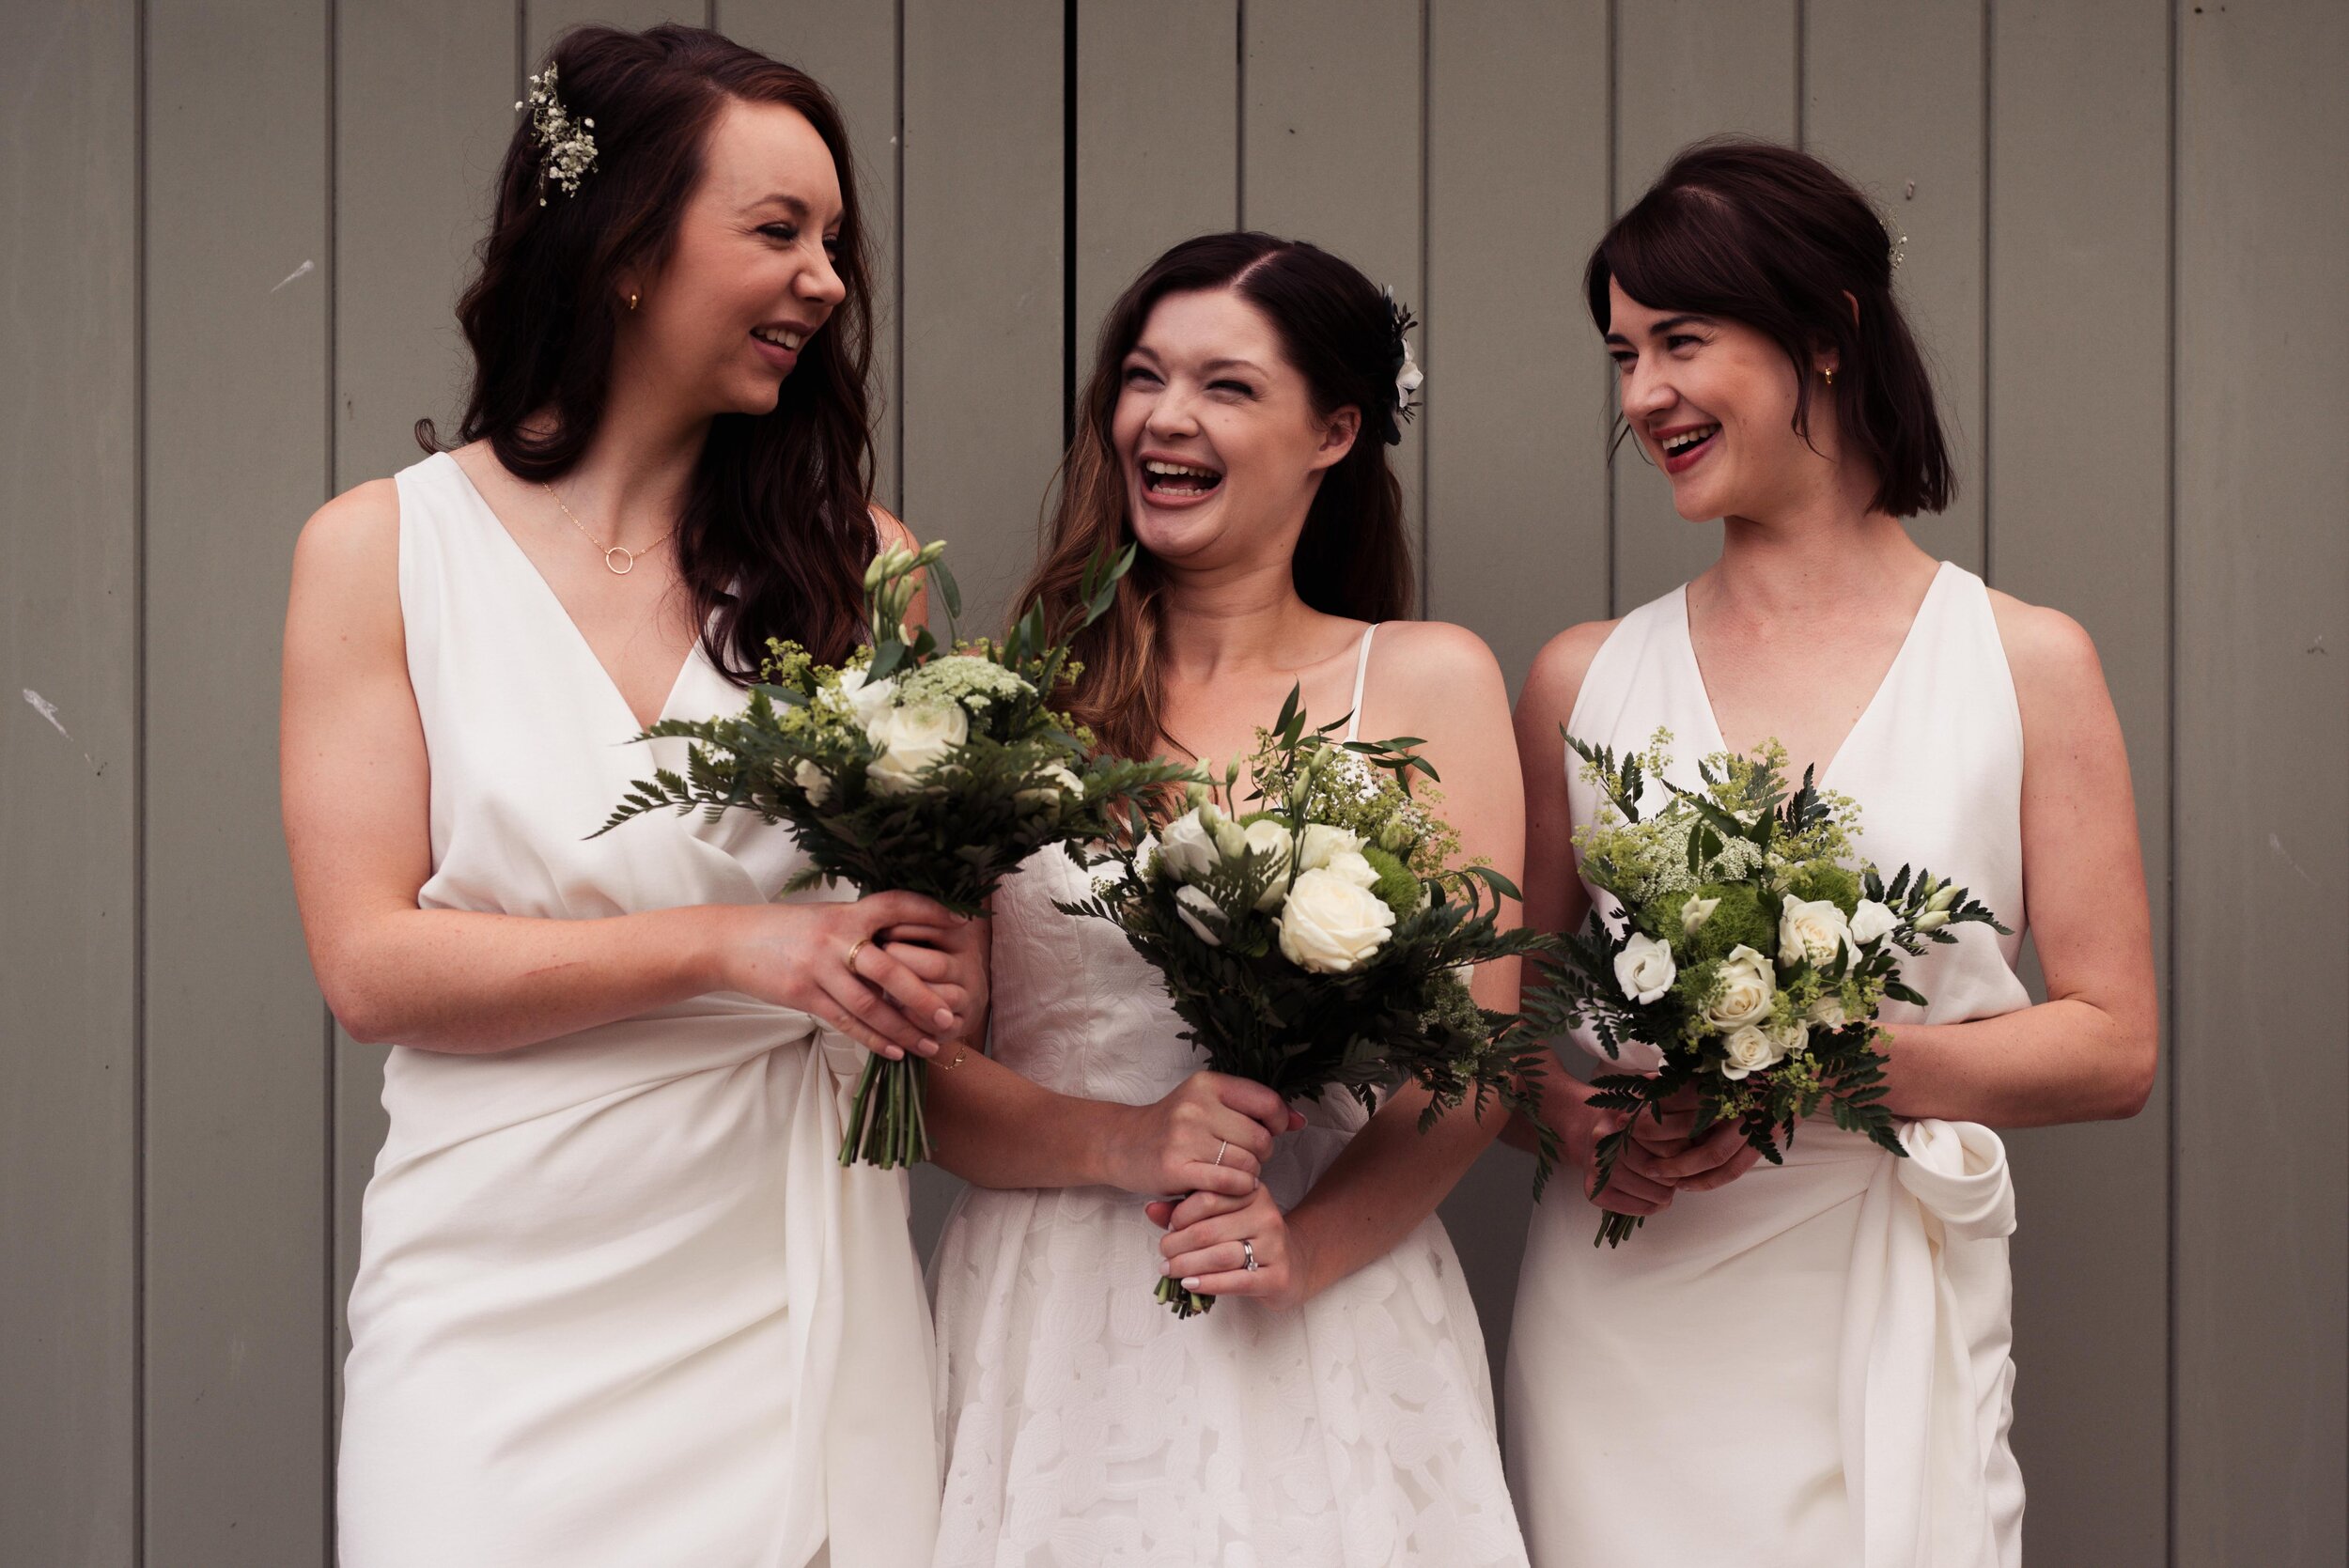 Bridesmaids laugh together